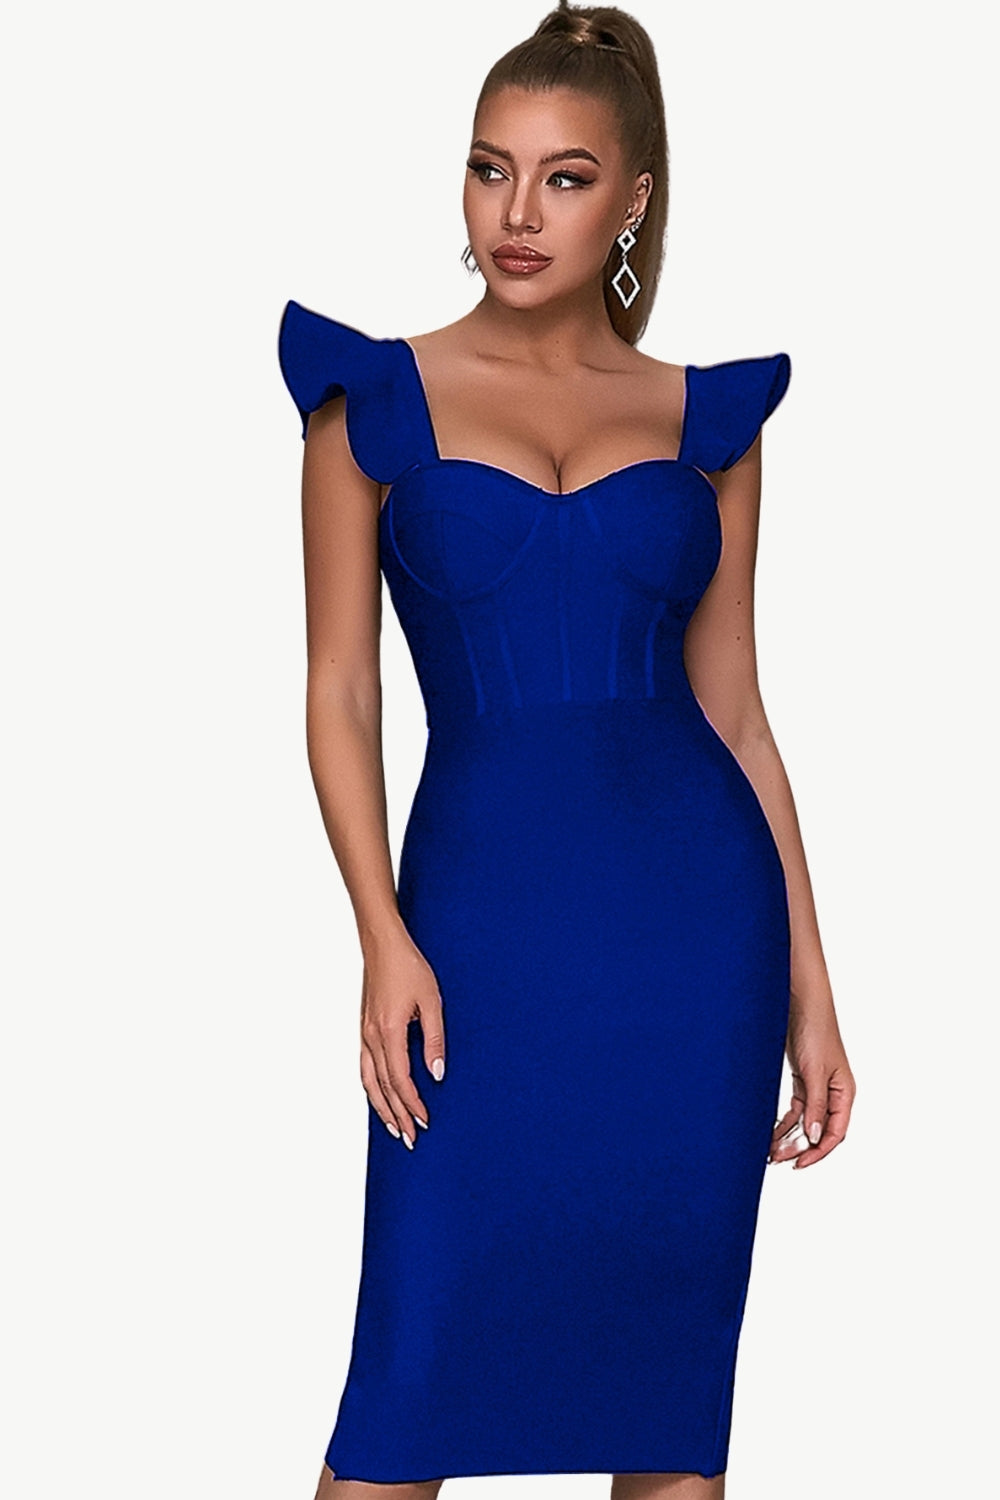 Royal Blue Sweetheart Neck Korsett Party Dress